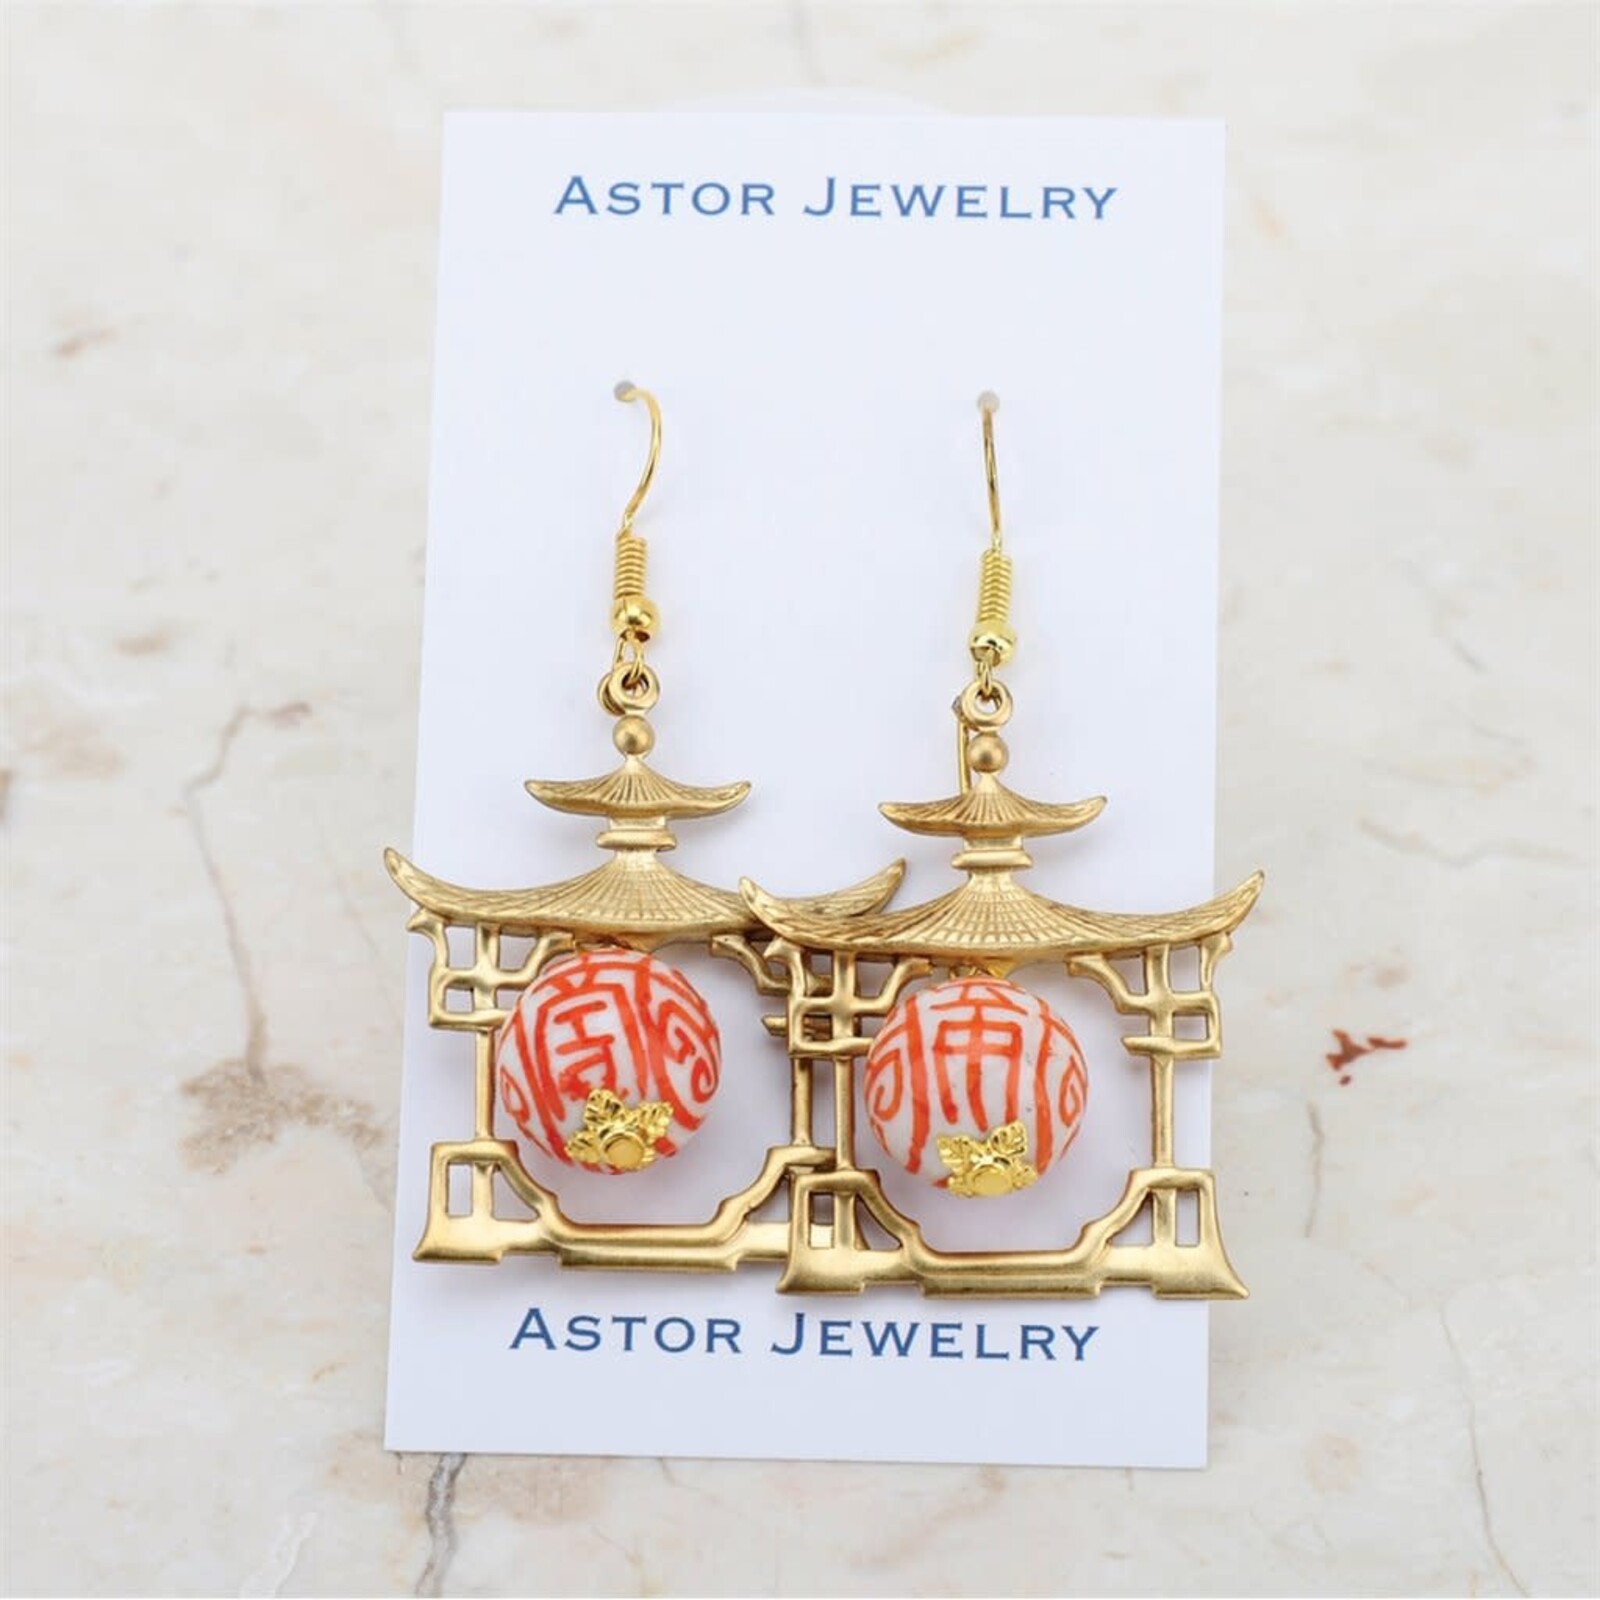 Astor Jewelry Brass Pagoda Earrings With Happy Orange Bead  Made in U.S.A 24094 loading=